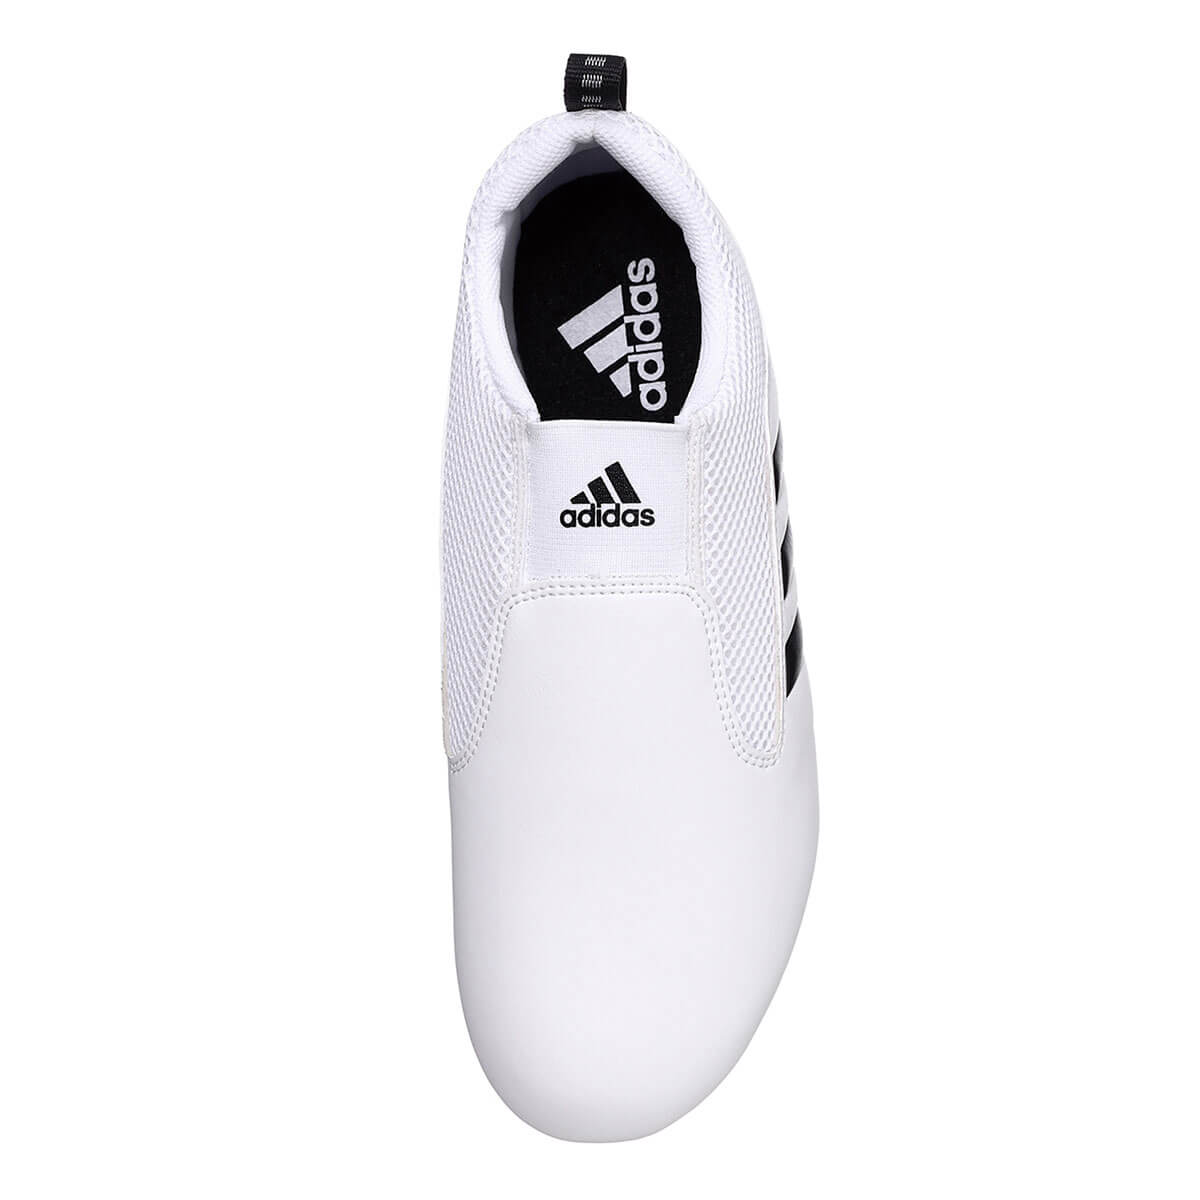 Adidas white Shoe